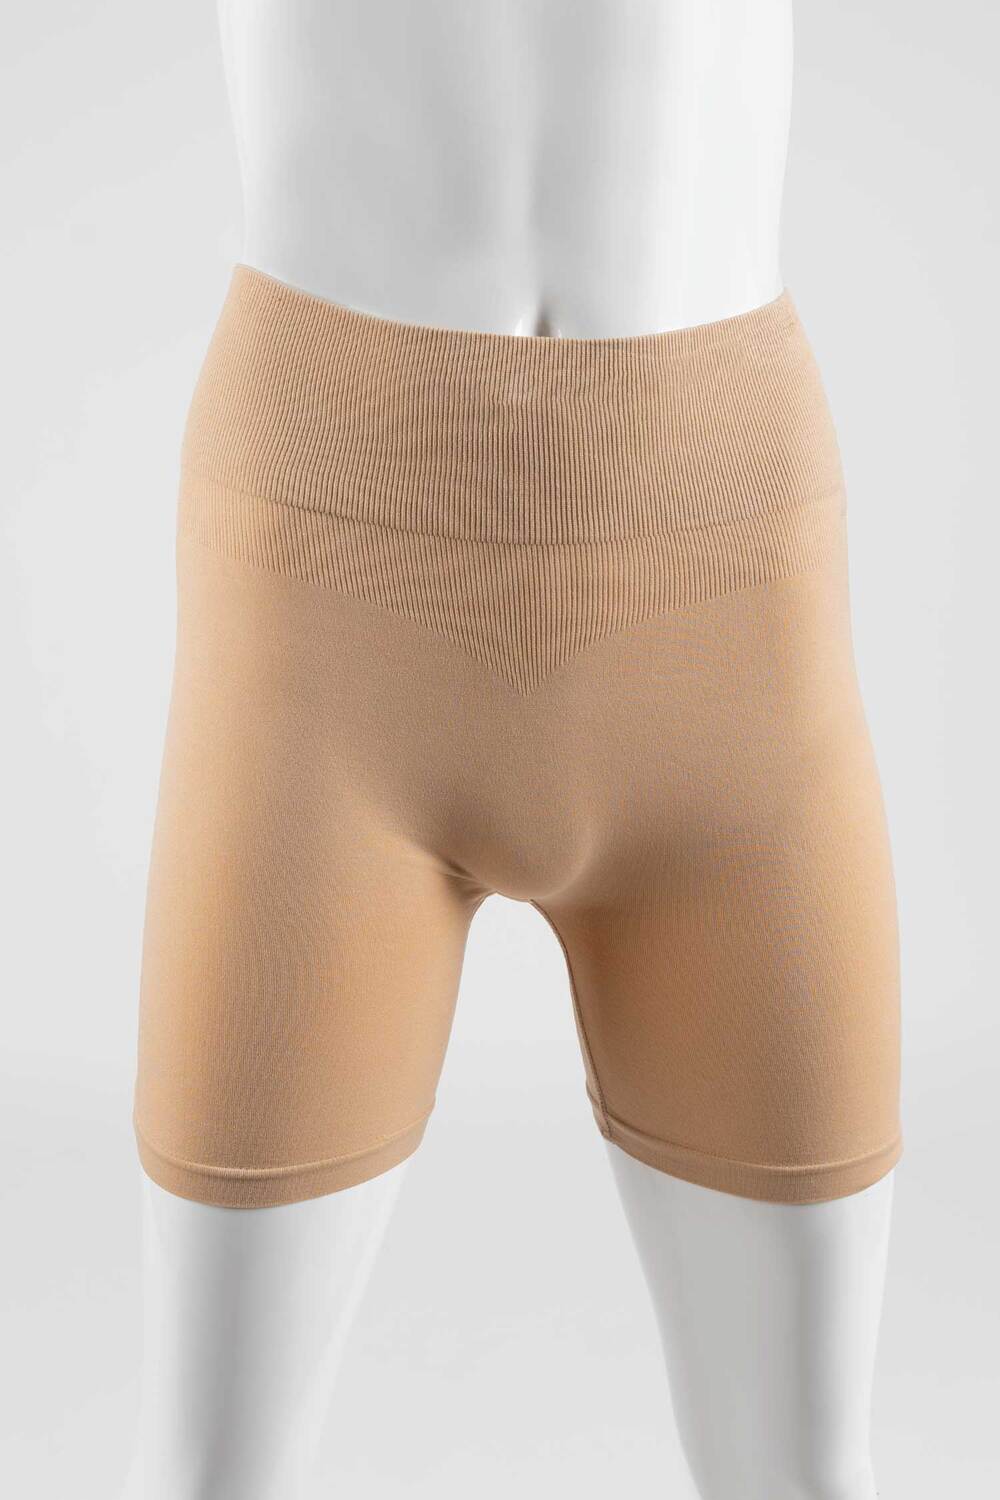 https://www.rossy.ca/media/A2W/products/seamless-shapewear-highwaited-shorts-beige-76915-1.jpg